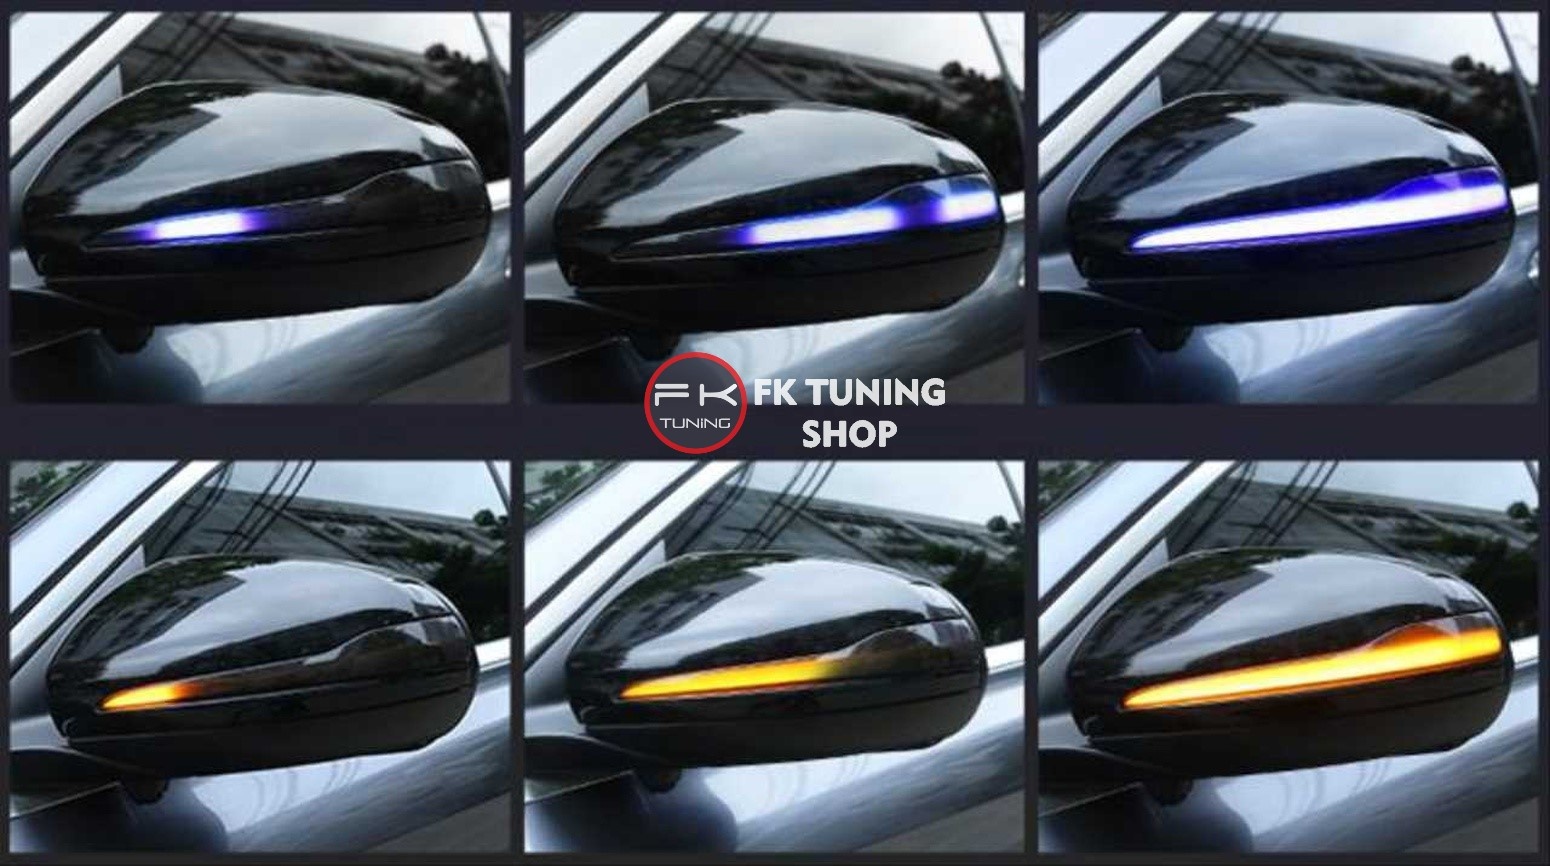 Mercedes Benz W447 Ayna Sinyali Mavi Selamlamalı Dinamik Led Kayar Sinyalli